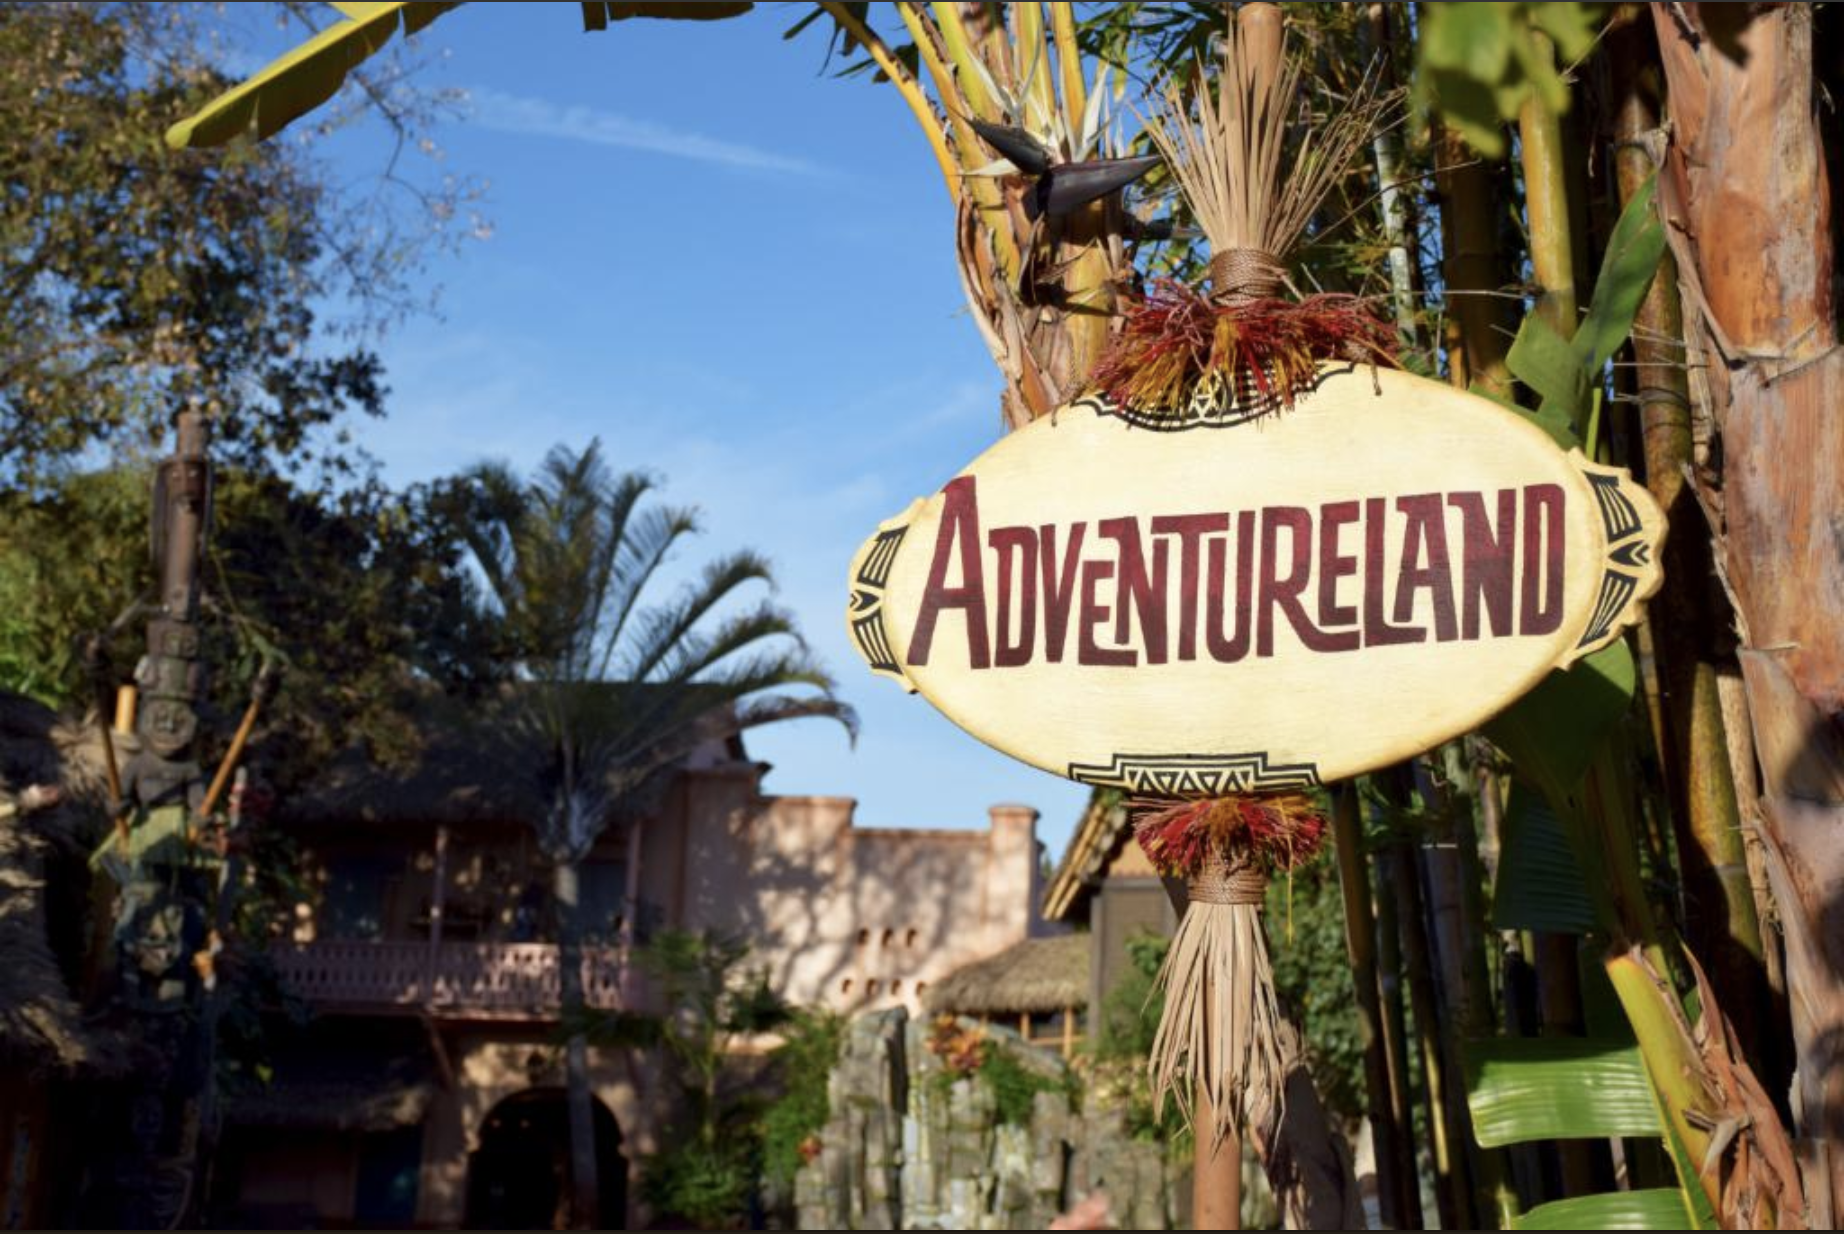 Historic Disneyland Sign Posted in Adventureland As ...